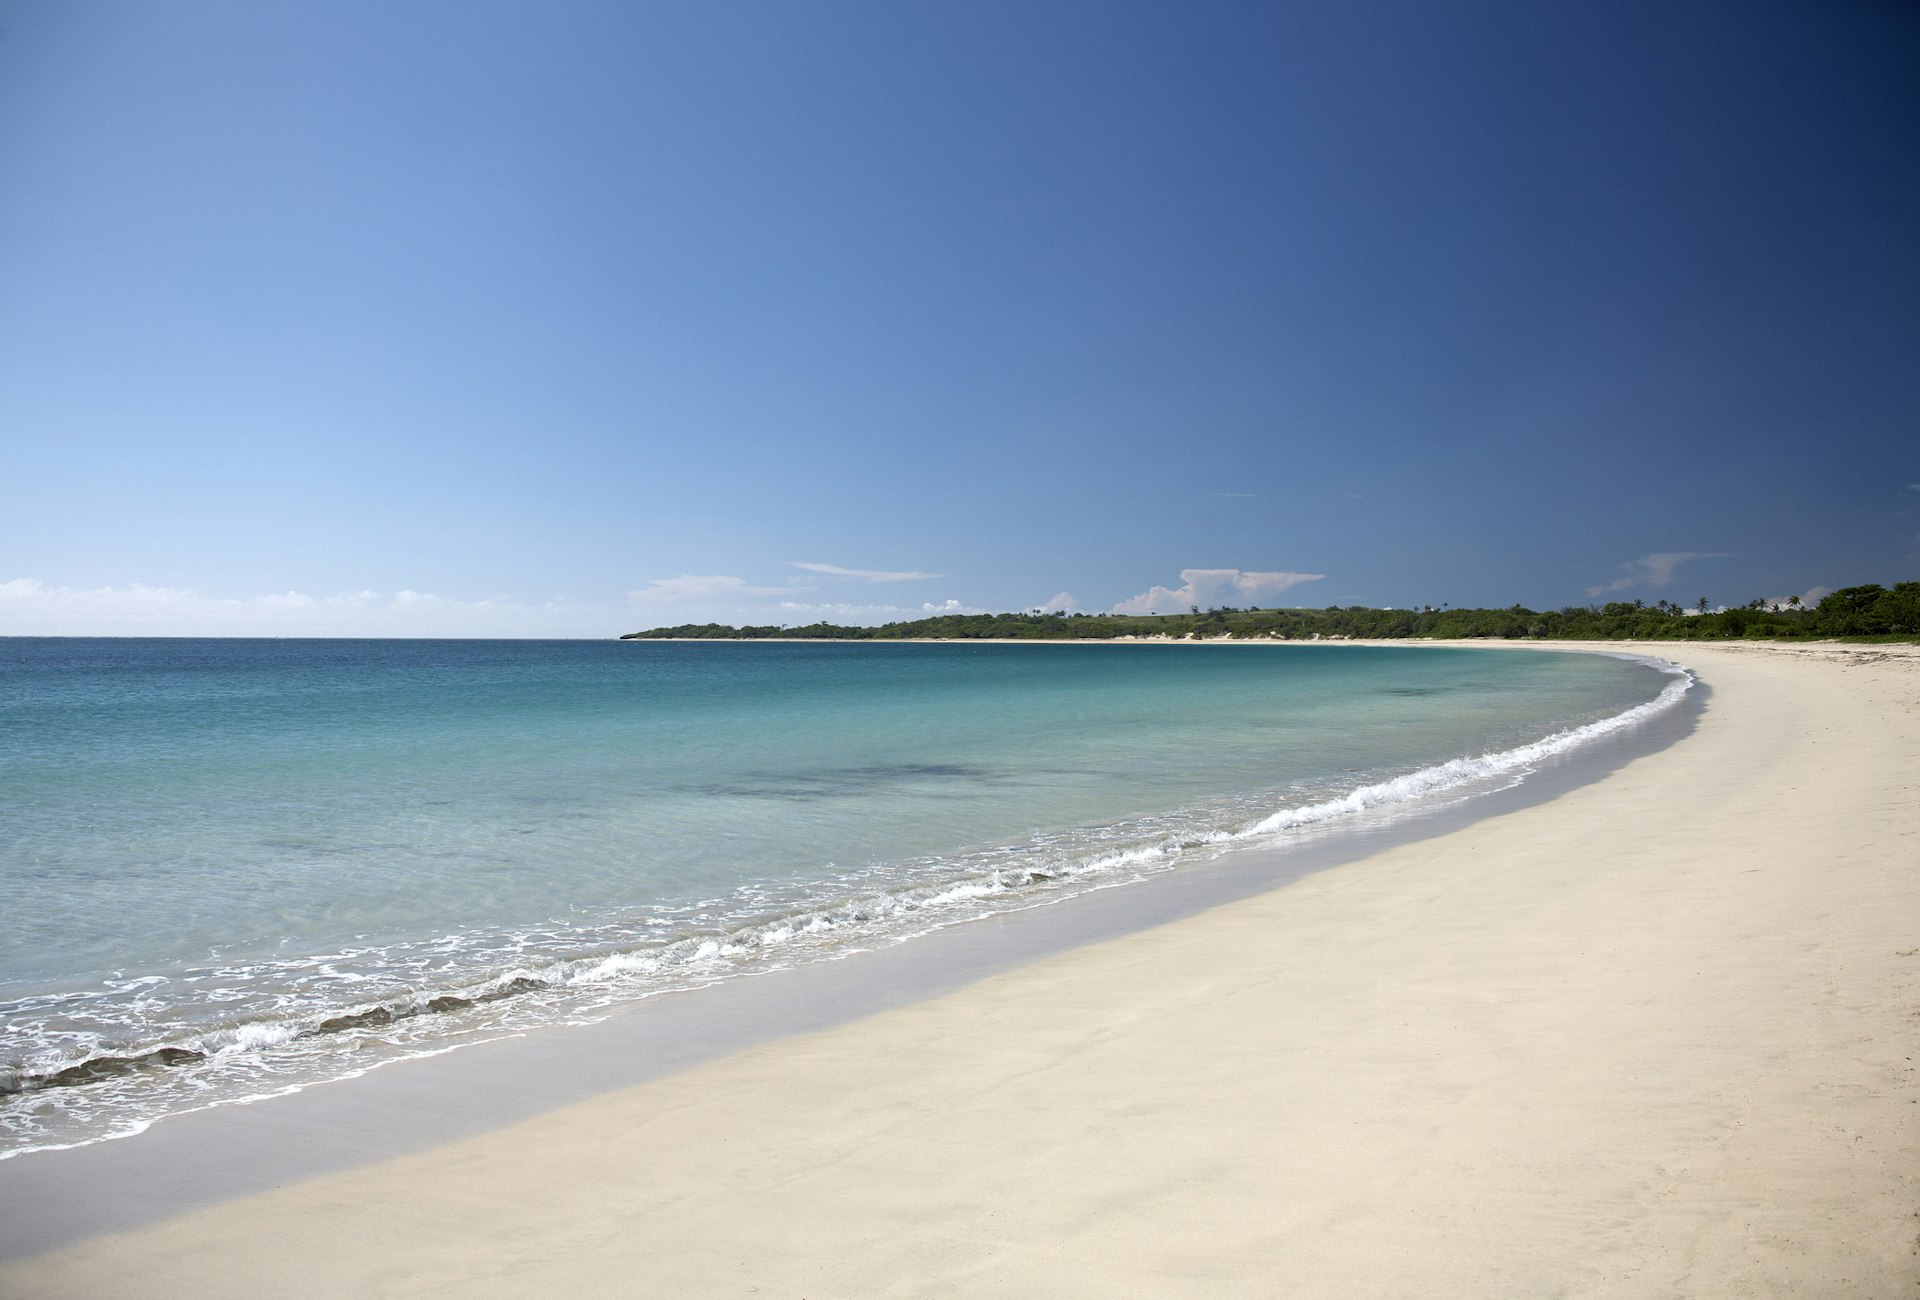 Natadola sand beach by Pacific Ocean sea on Fiji in South Pacific